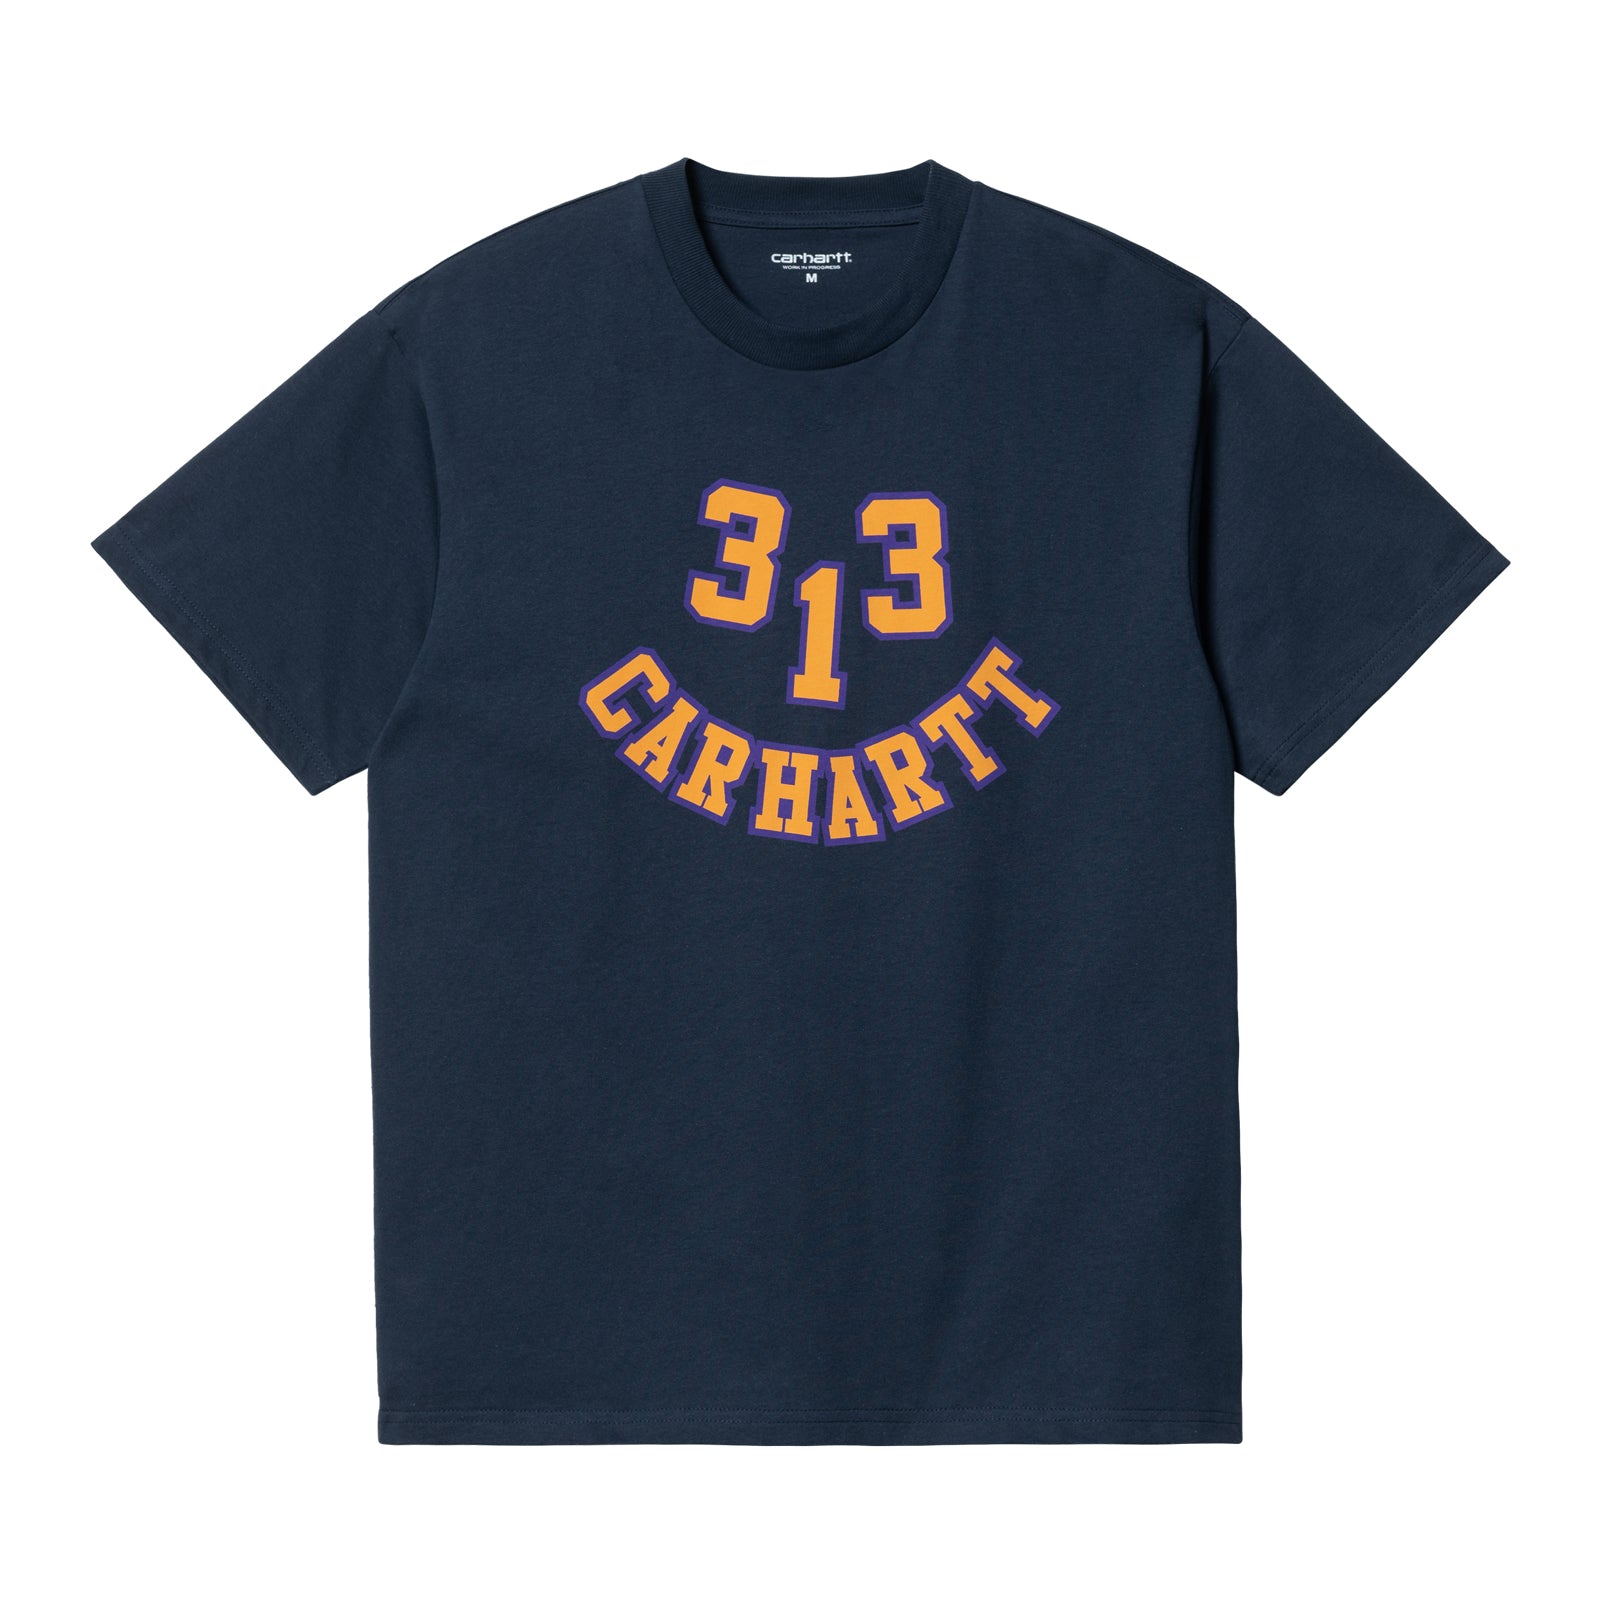 Carhartt WIP 313 Smile T-Shirt Blue. Foto de frente.